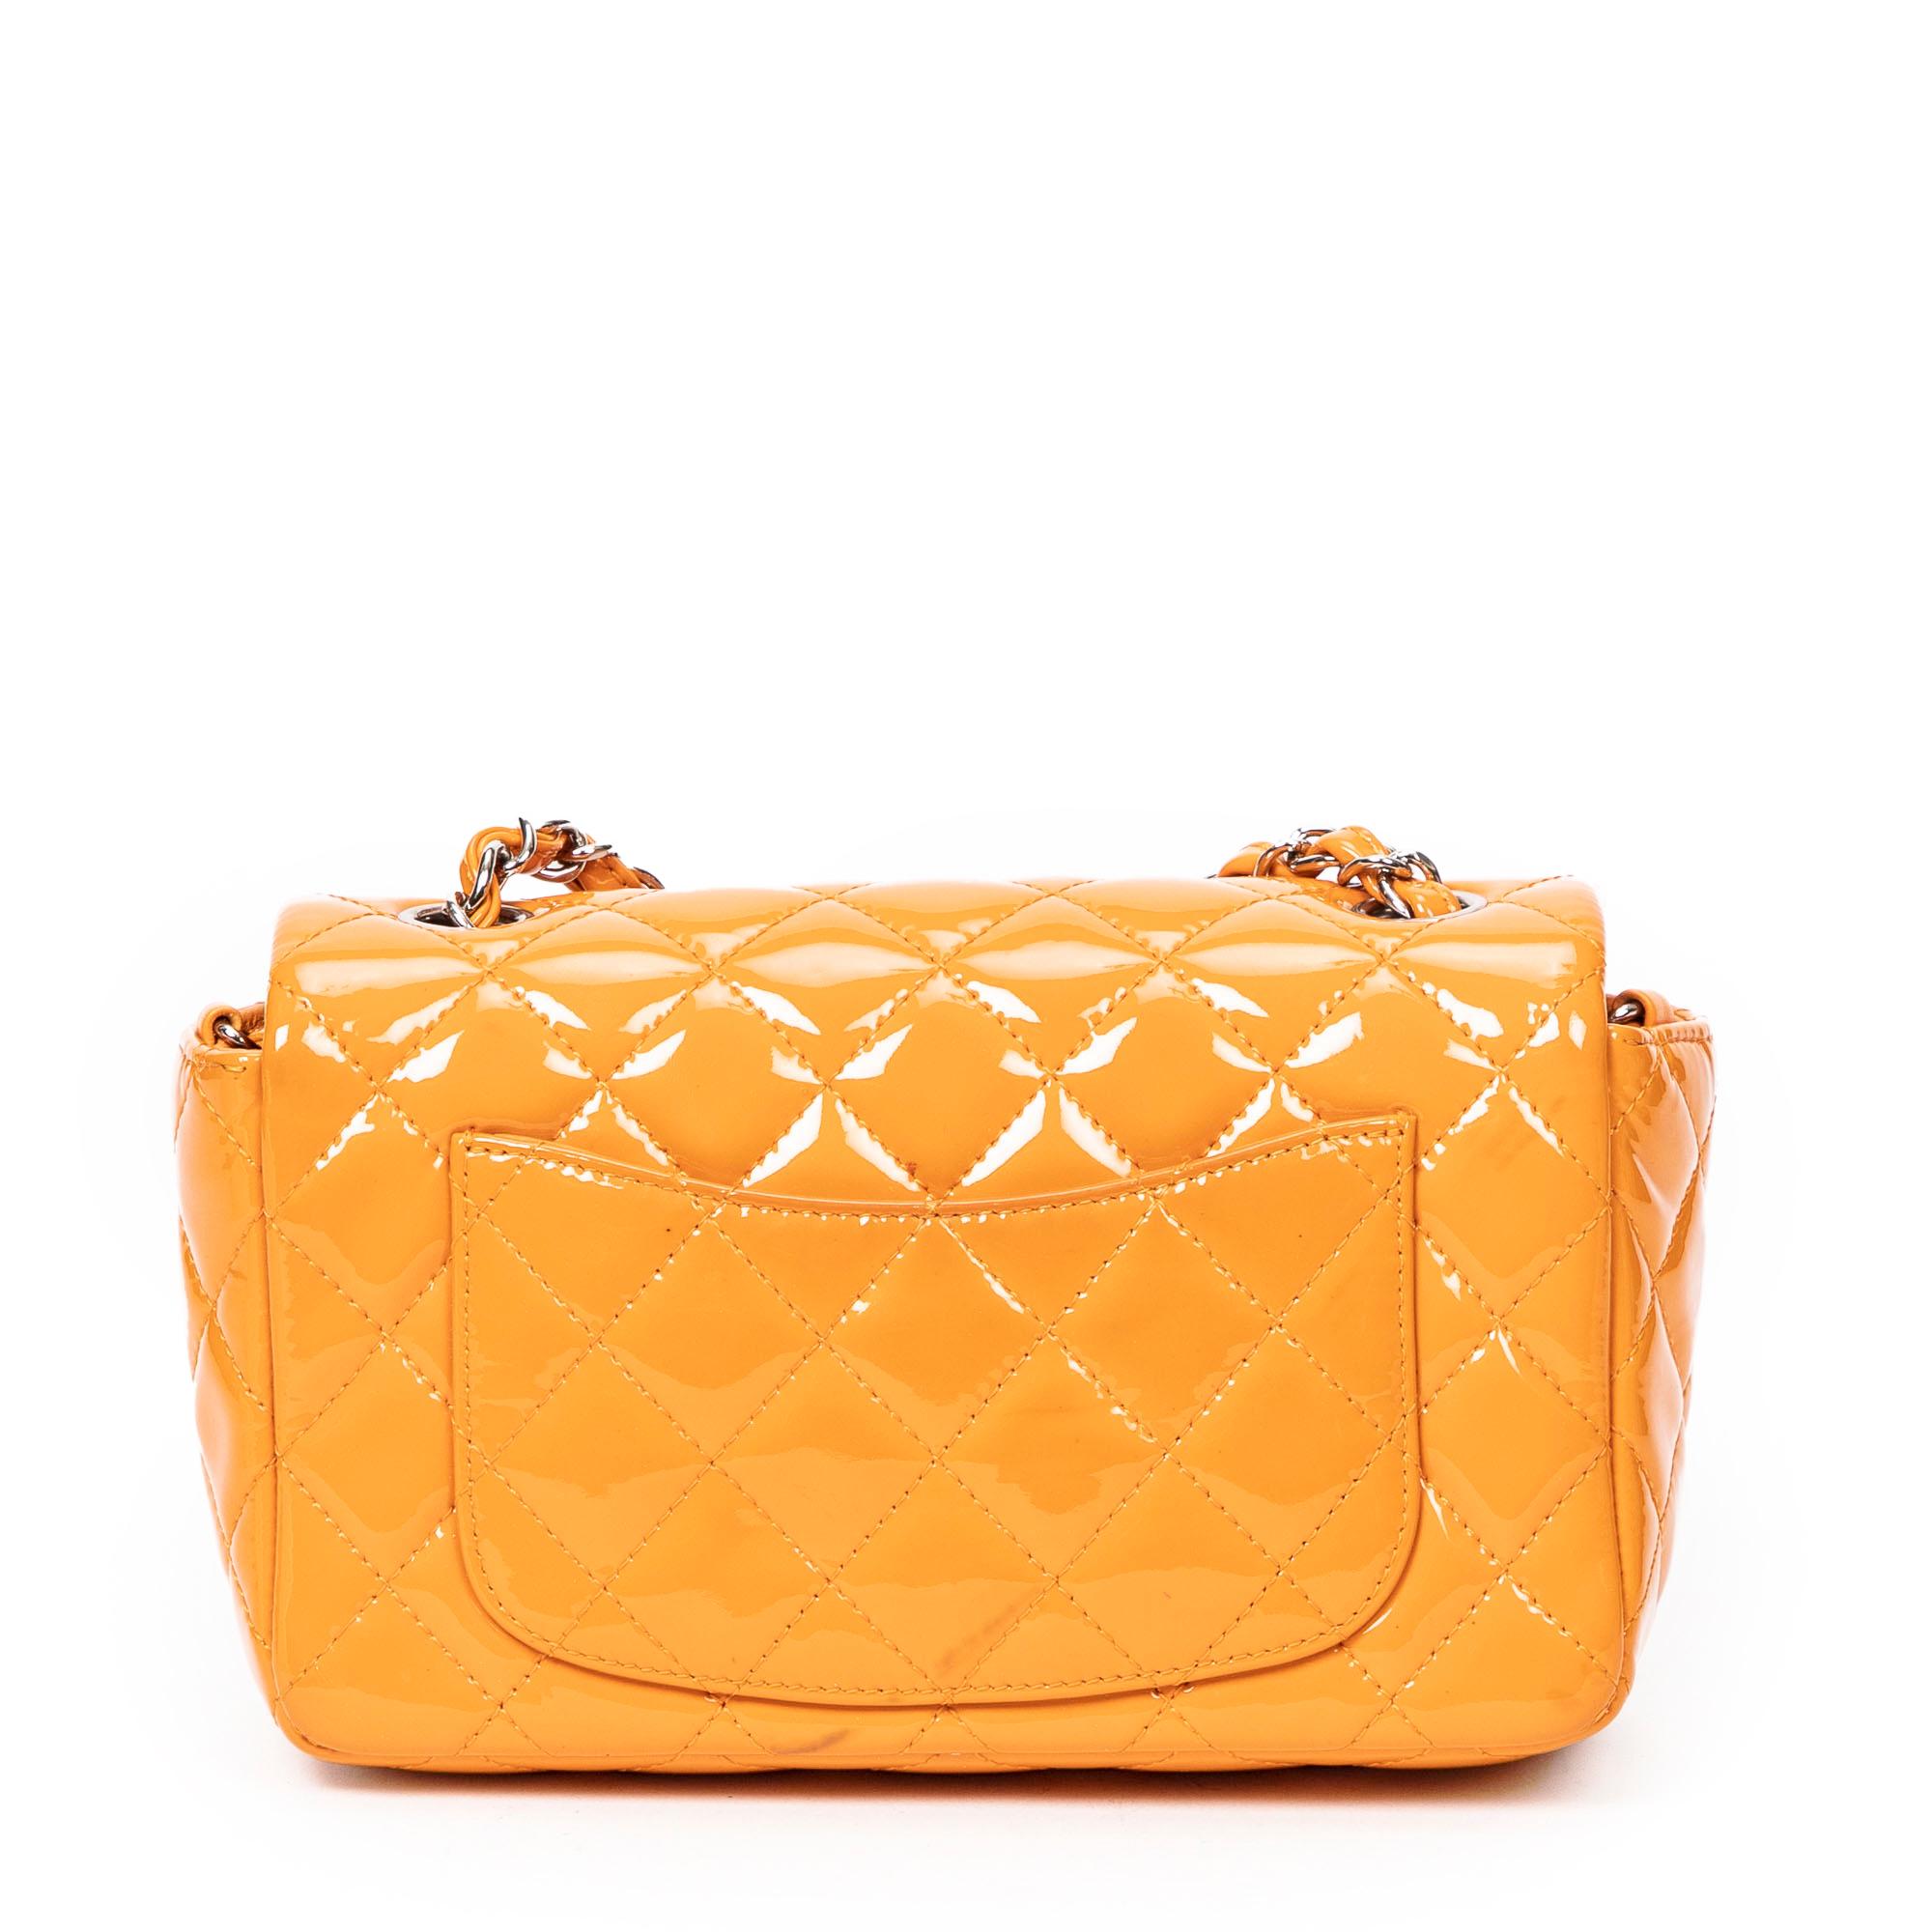 Chanel 2014 Orange Patent Leather Mini Single Flap Bag In Good Condition For Sale In Atlanta, GA